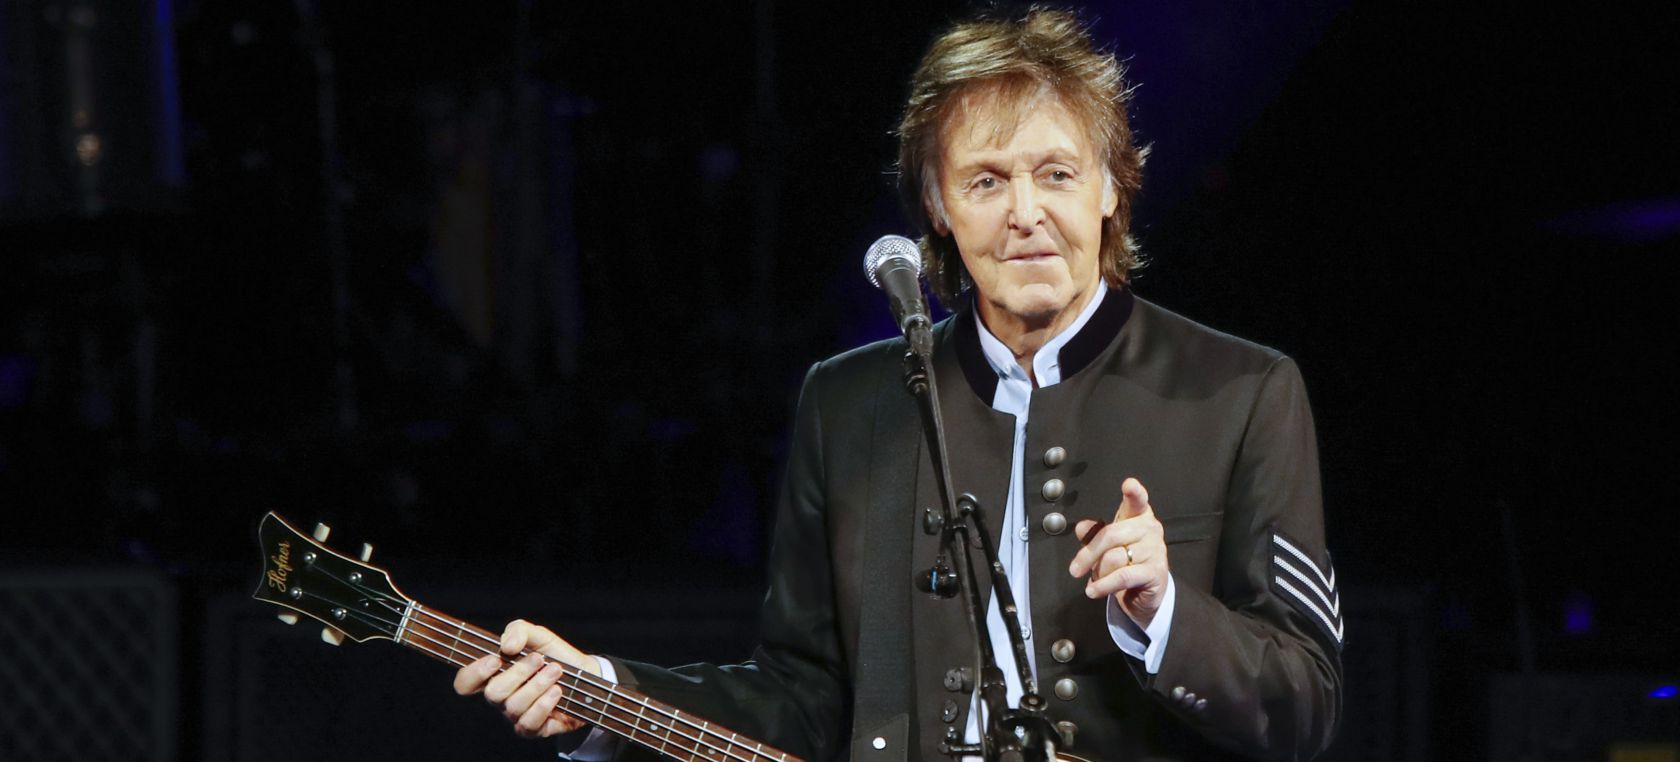 Paul McCartney vuelve a ser el “granjero que toca la guitarra” en ‘McCartney III’